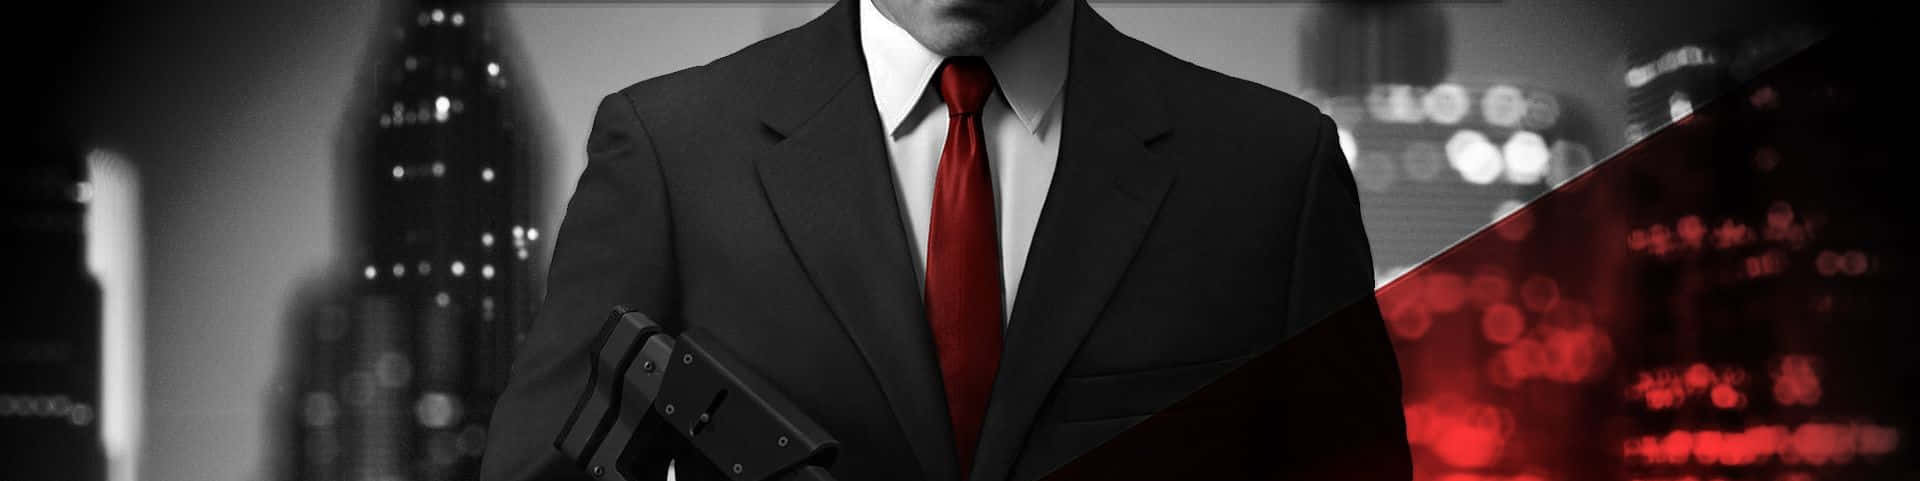 Stylish Red Tie on a Dark Background Wallpaper